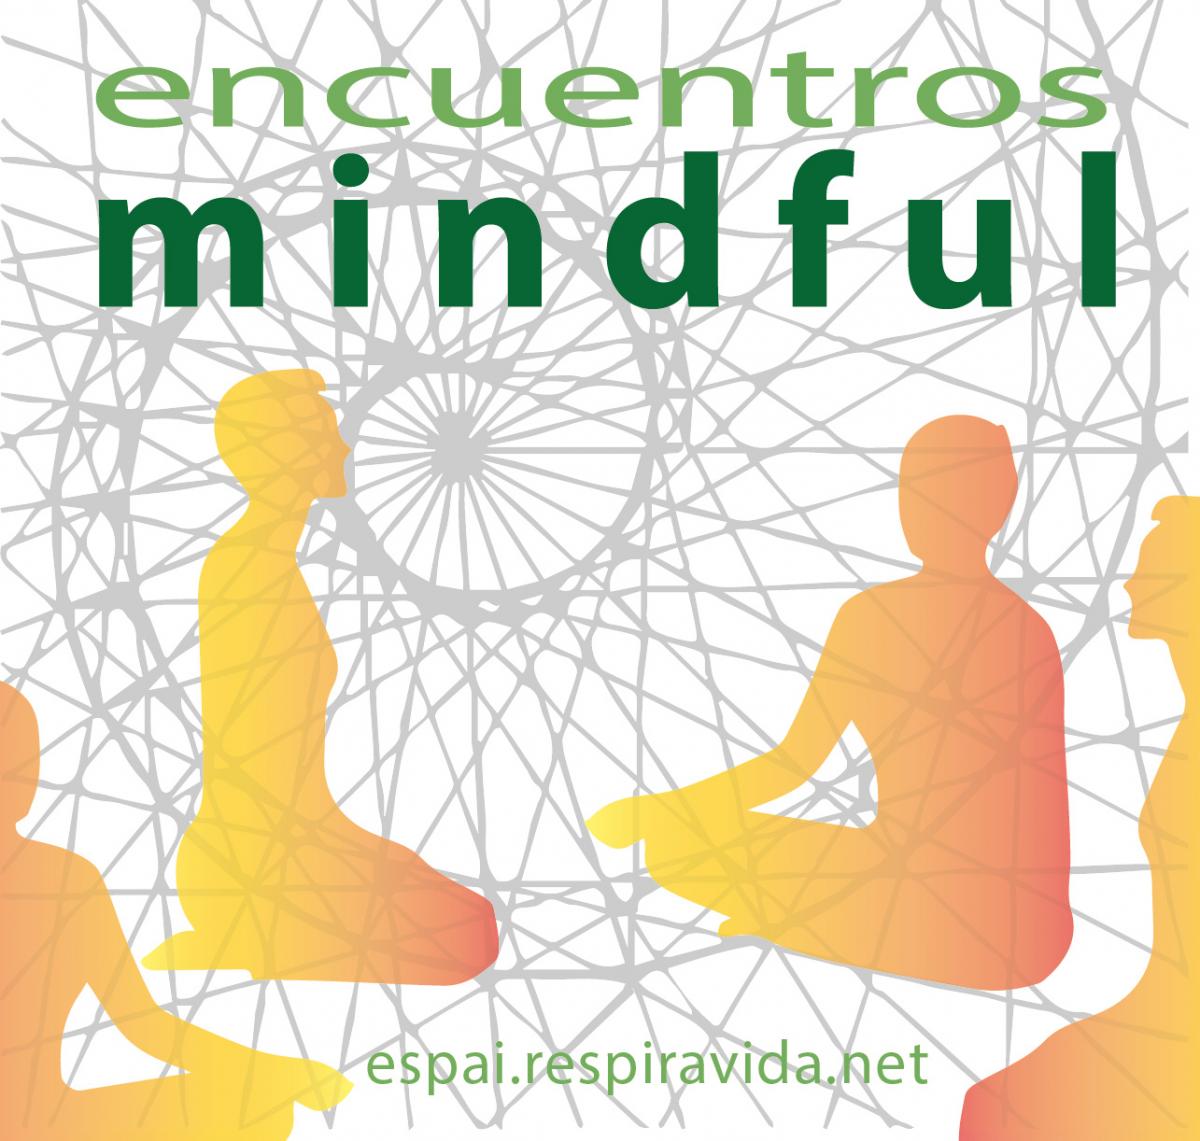 Encuentro mindful